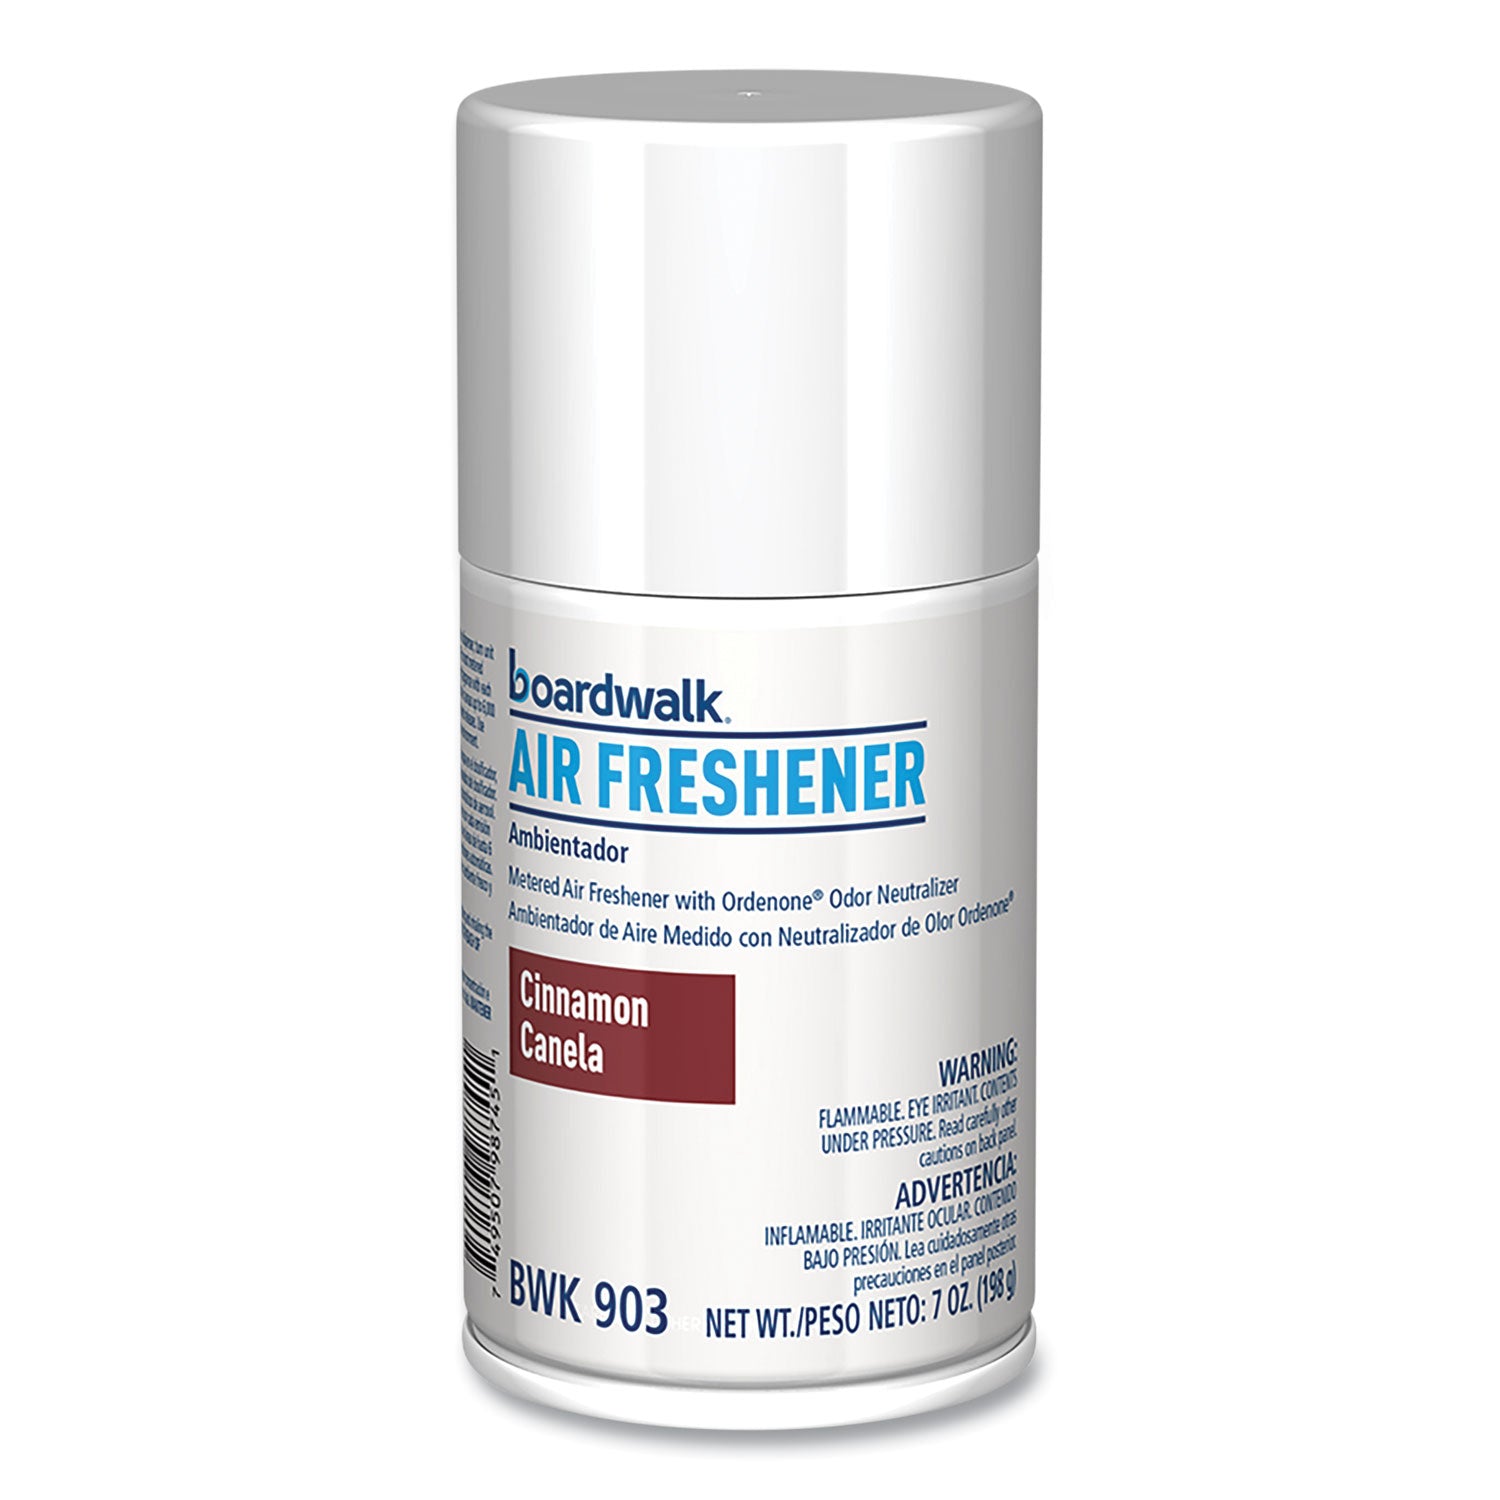 metered-air-freshener-refill-cinnamon-sunset-7-oz-aerosol-spray-12-carton_bwk903 - 3